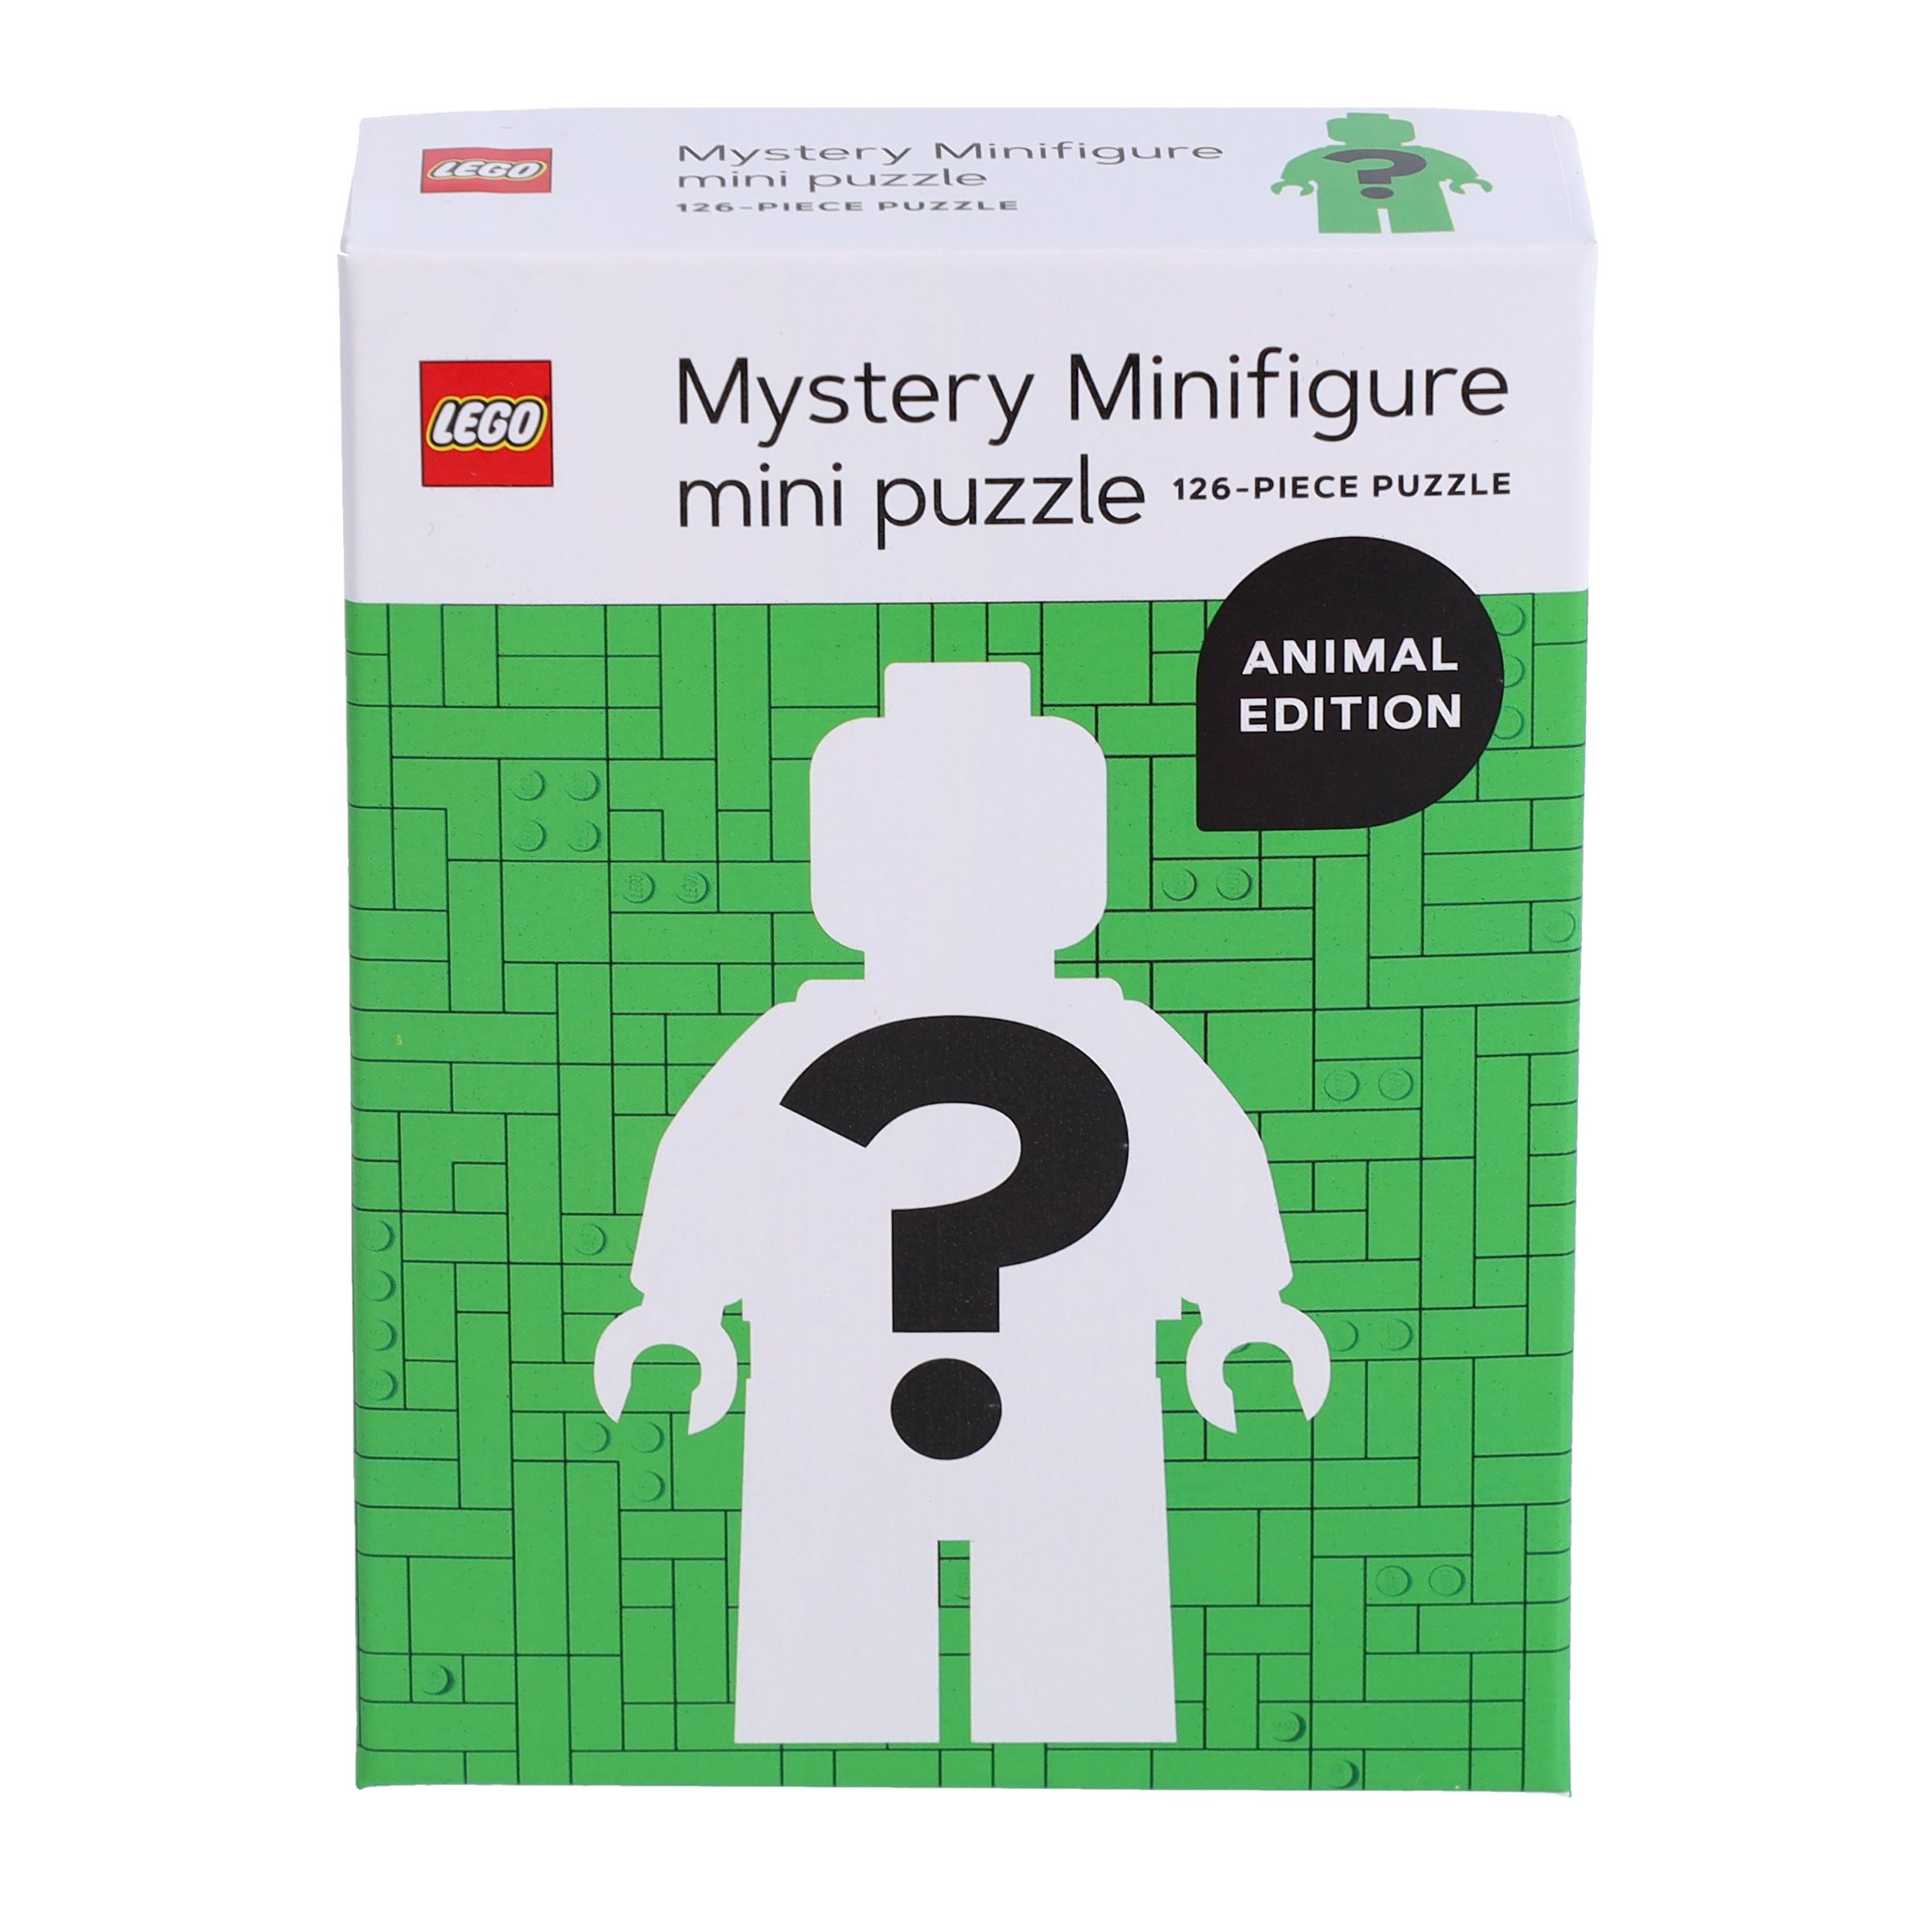 Mystery Minifigure Mini-Puzzle Animal Edition 5008127, Minifigures